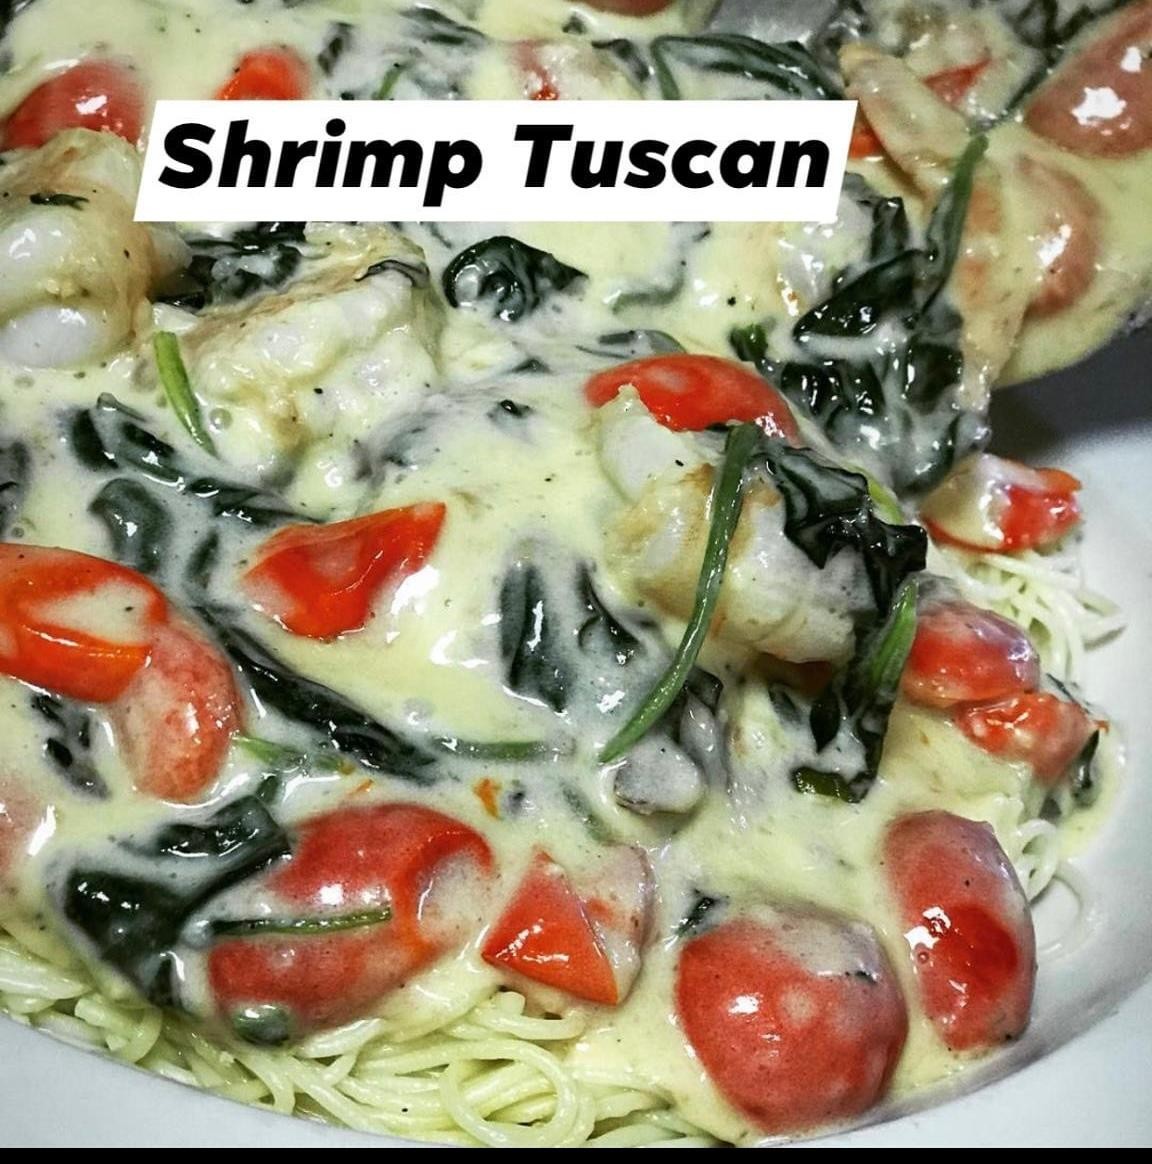 Shrimp Tucsan pasta